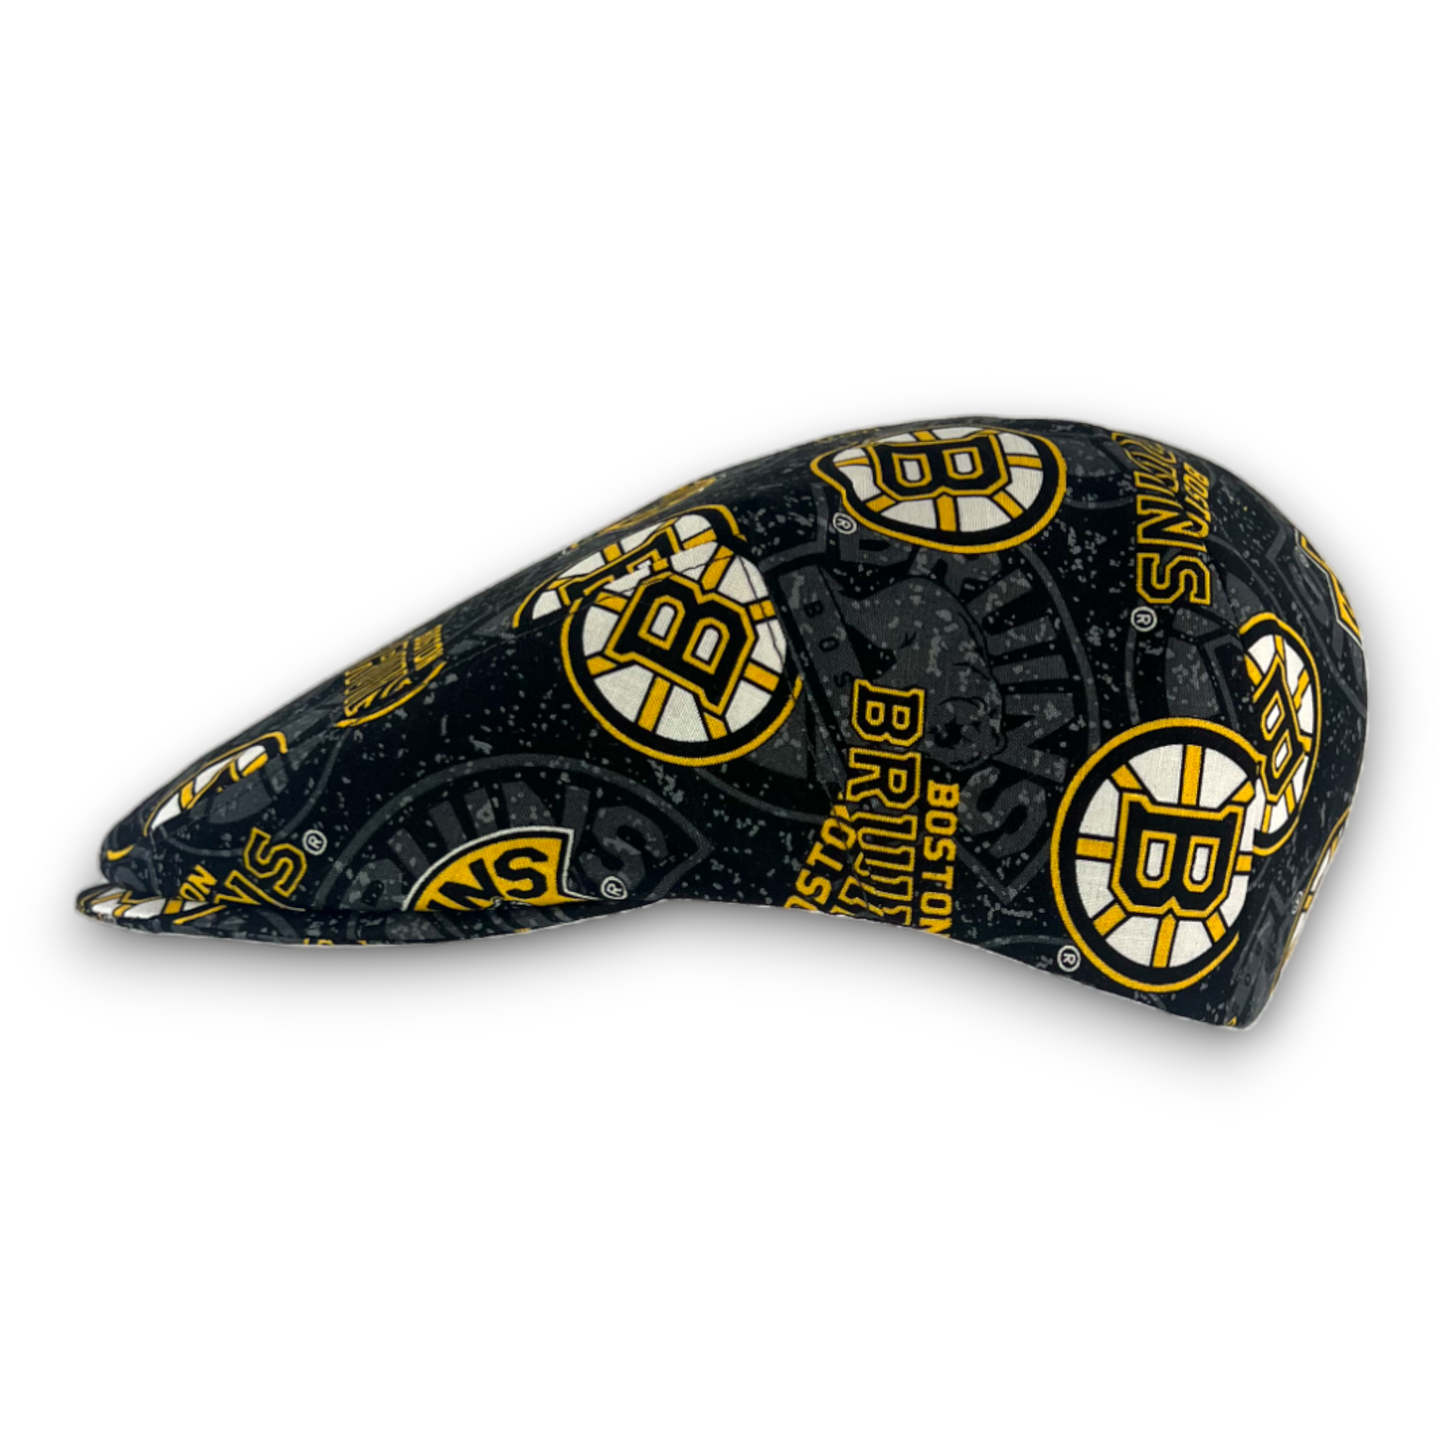 Custom Made Jeff Cap Handmade in Boston Bruins Watermark Print Fabric